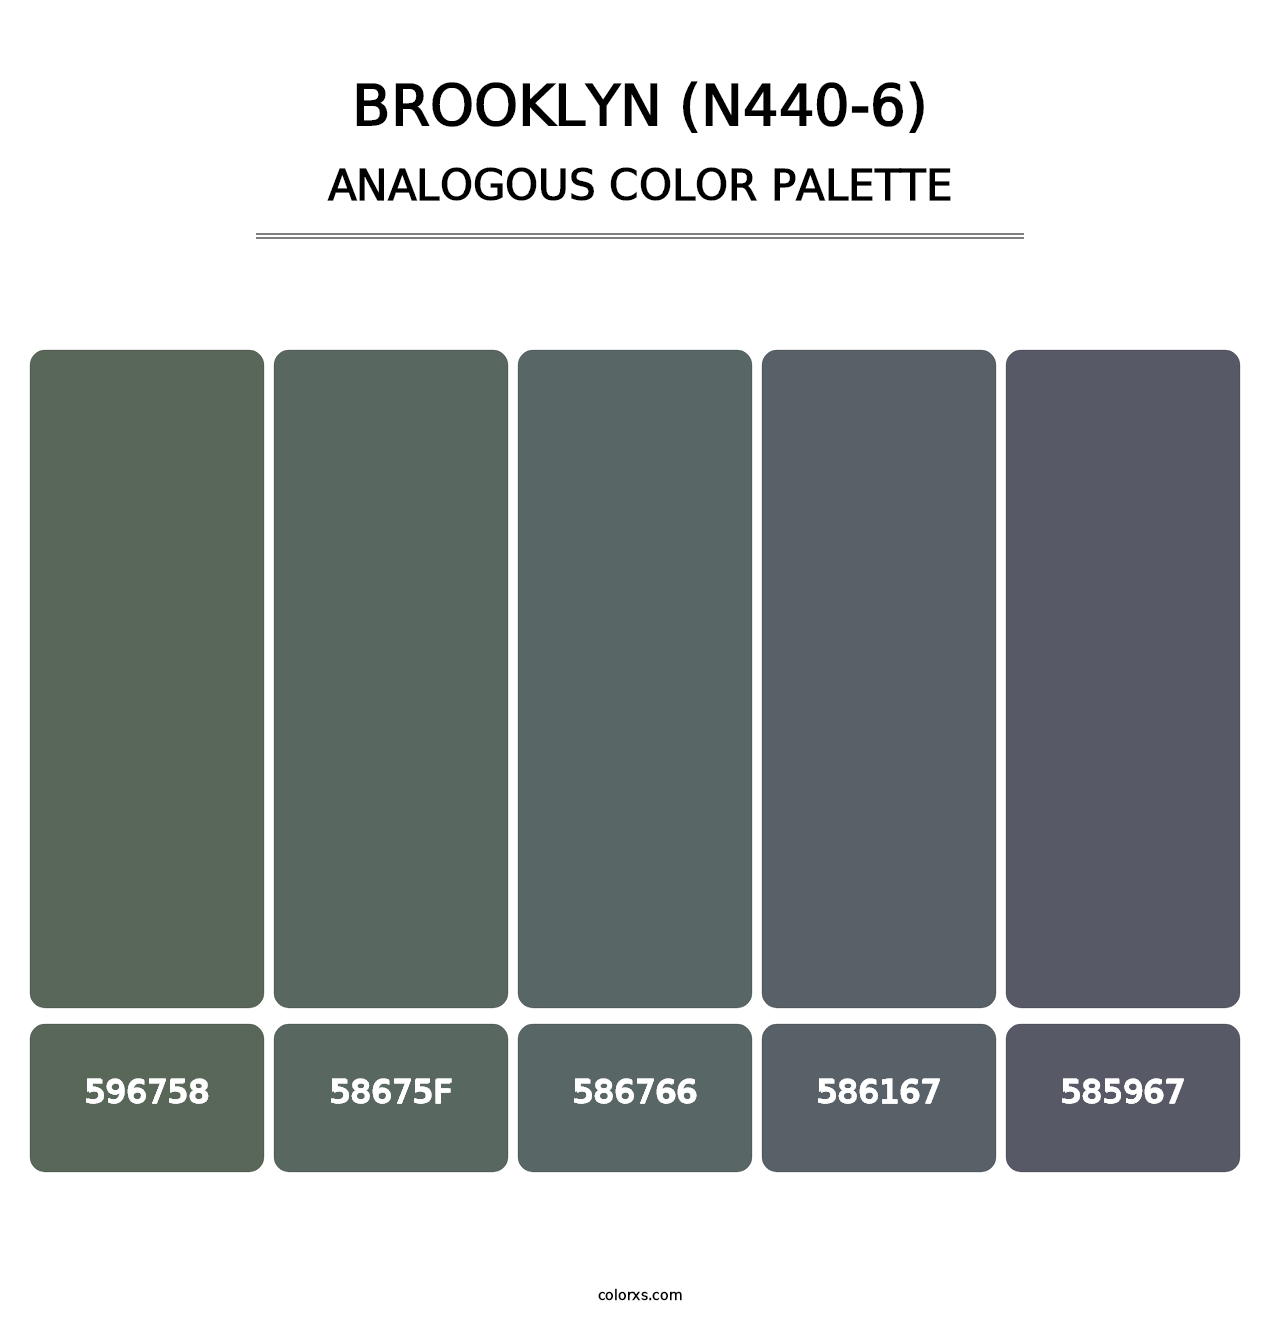 Brooklyn (N440-6) - Analogous Color Palette